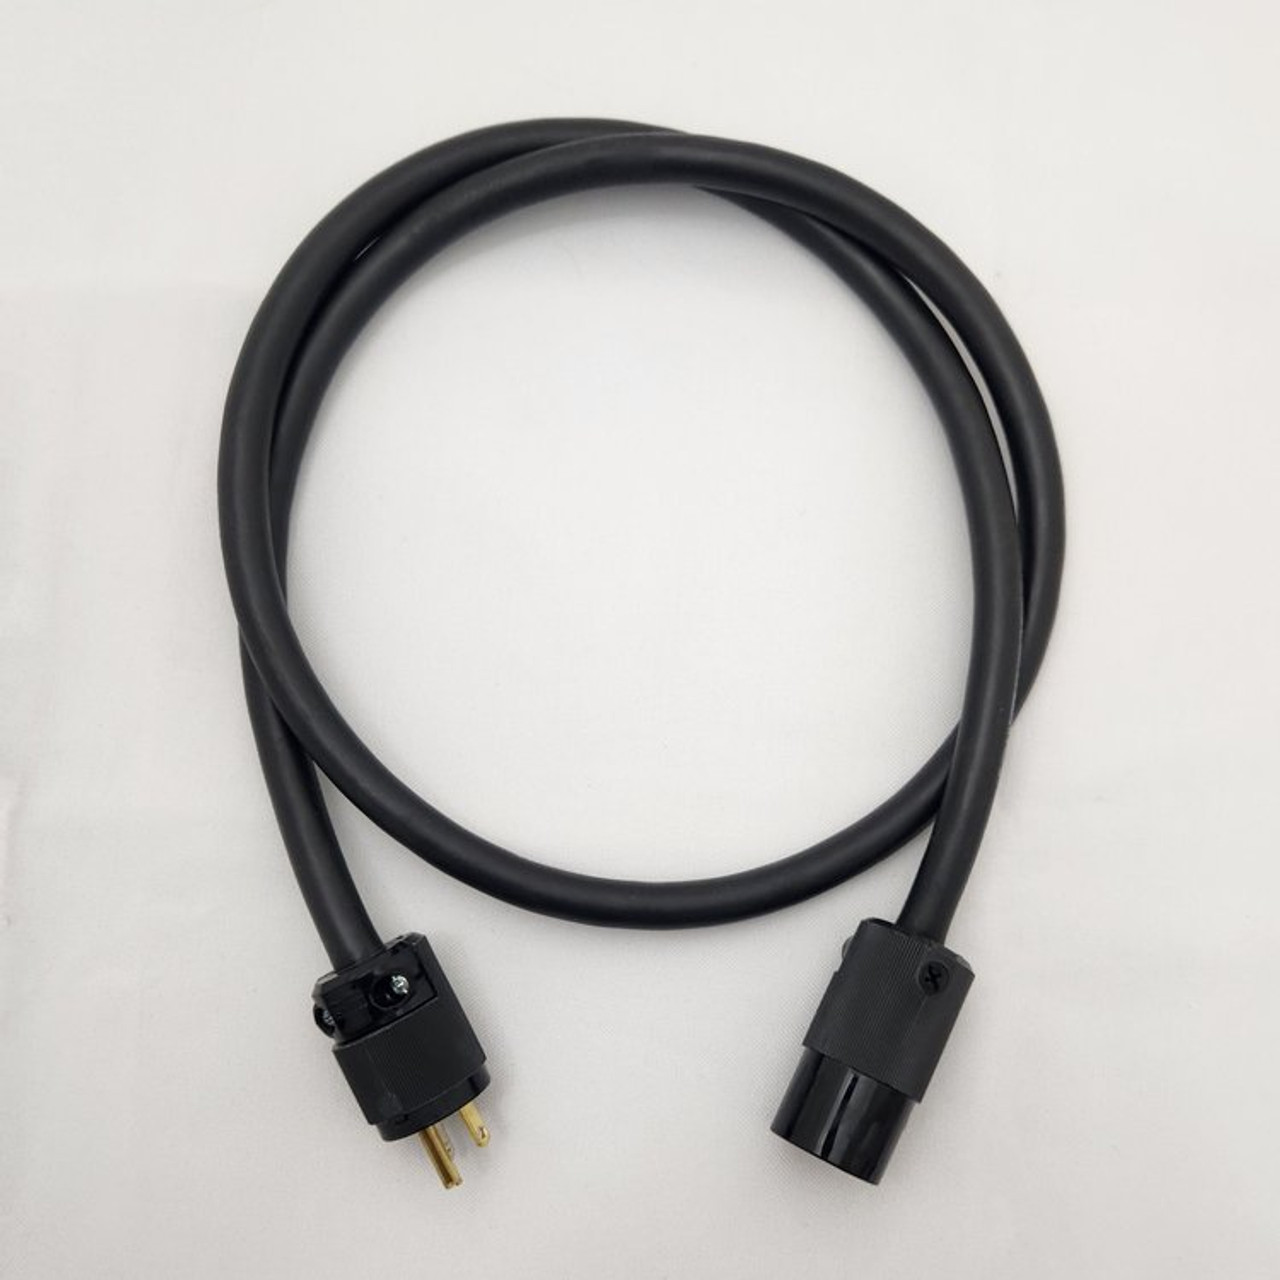 PlugsPlus 50 Foot Straight Blade / Edison / NEMA 5-15 Extension Cable